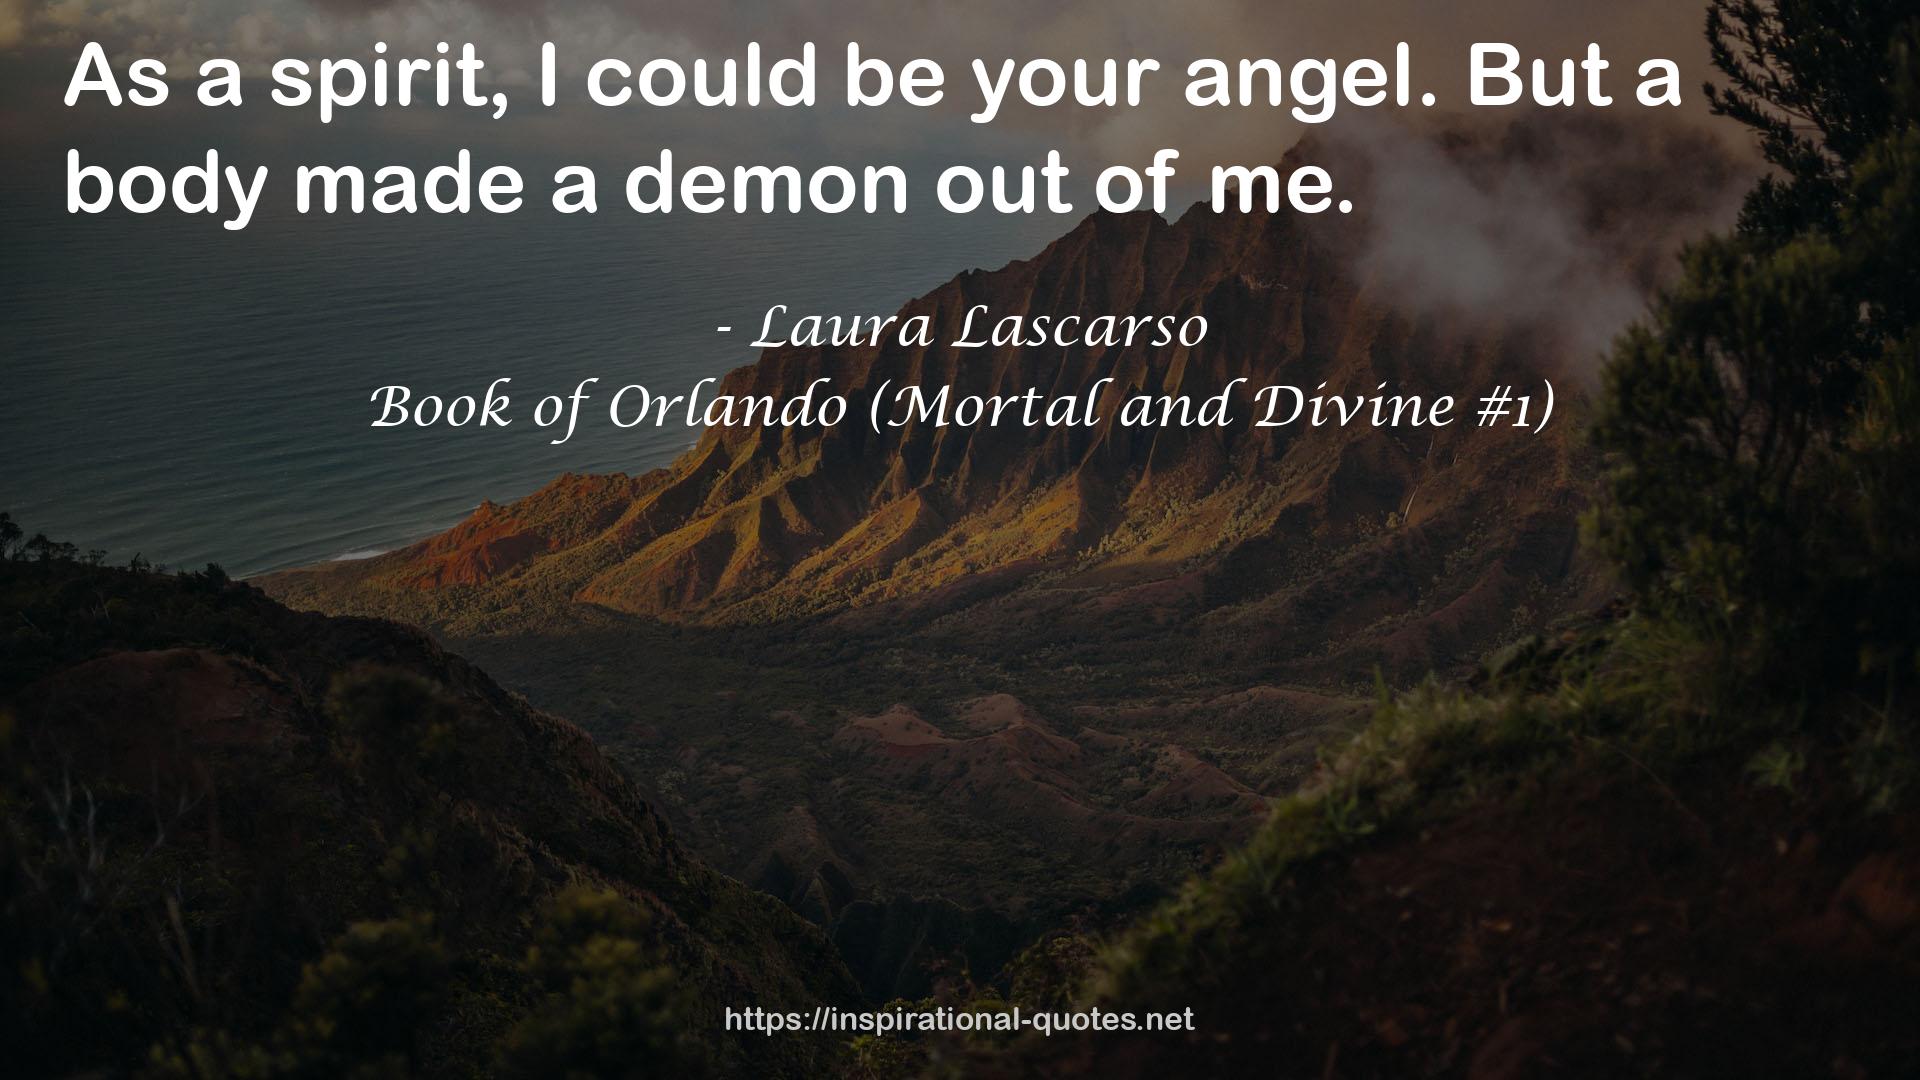 Book of Orlando (Mortal and Divine #1) QUOTES